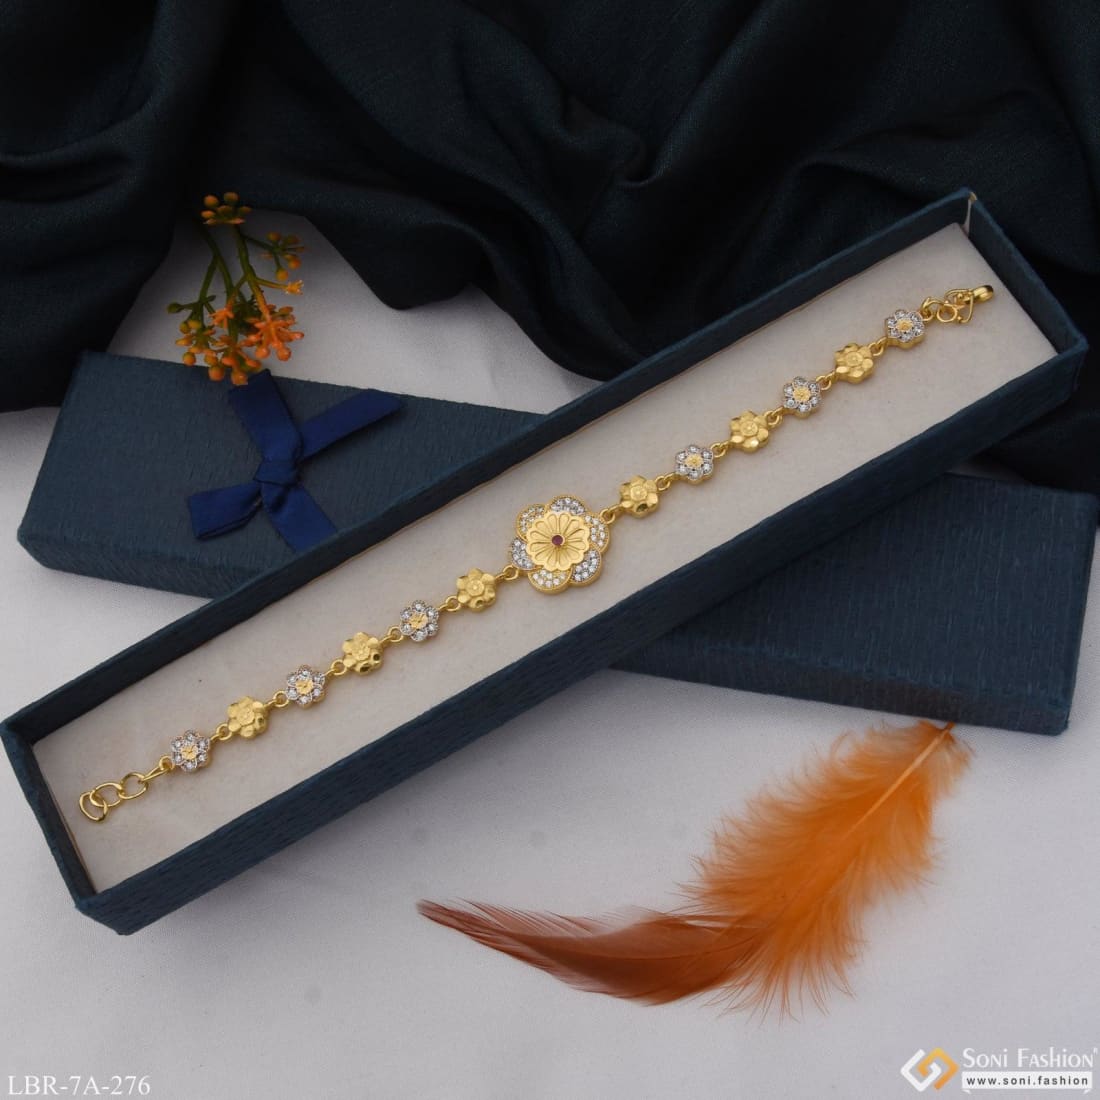 The Gold Leaf Bracelet Single Lady Gold Leaves Jewelry Set Elegant Bracelet  Gold Bracelet Chain Leaf Jewelry Bridesmaids Gift Bracelets Set - Etsy